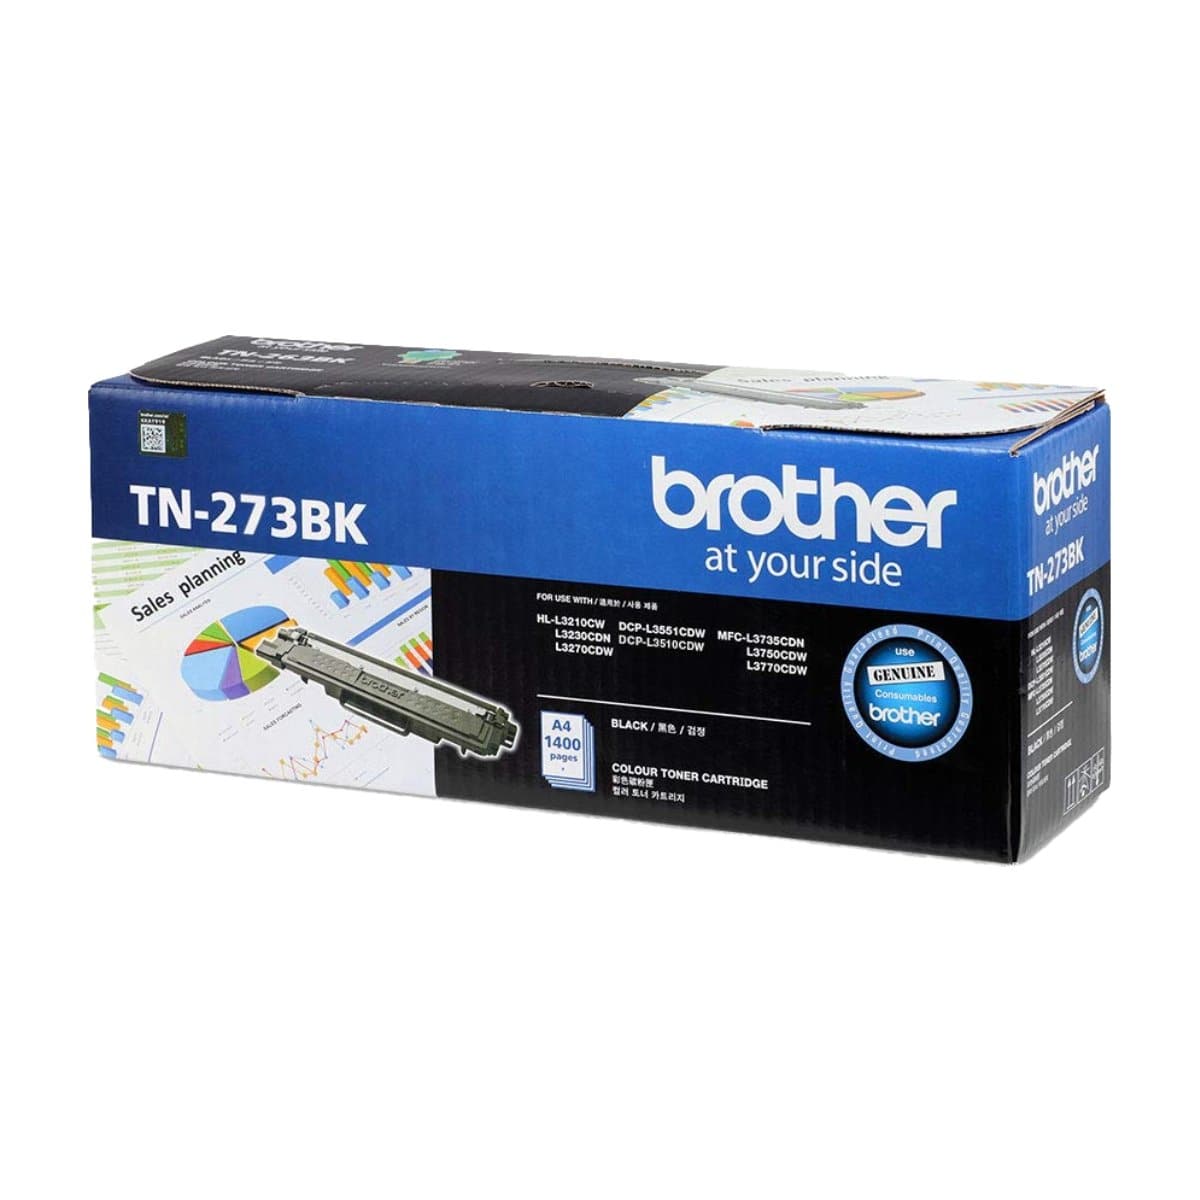 Brother TN-273BK Black Toner Cartridge